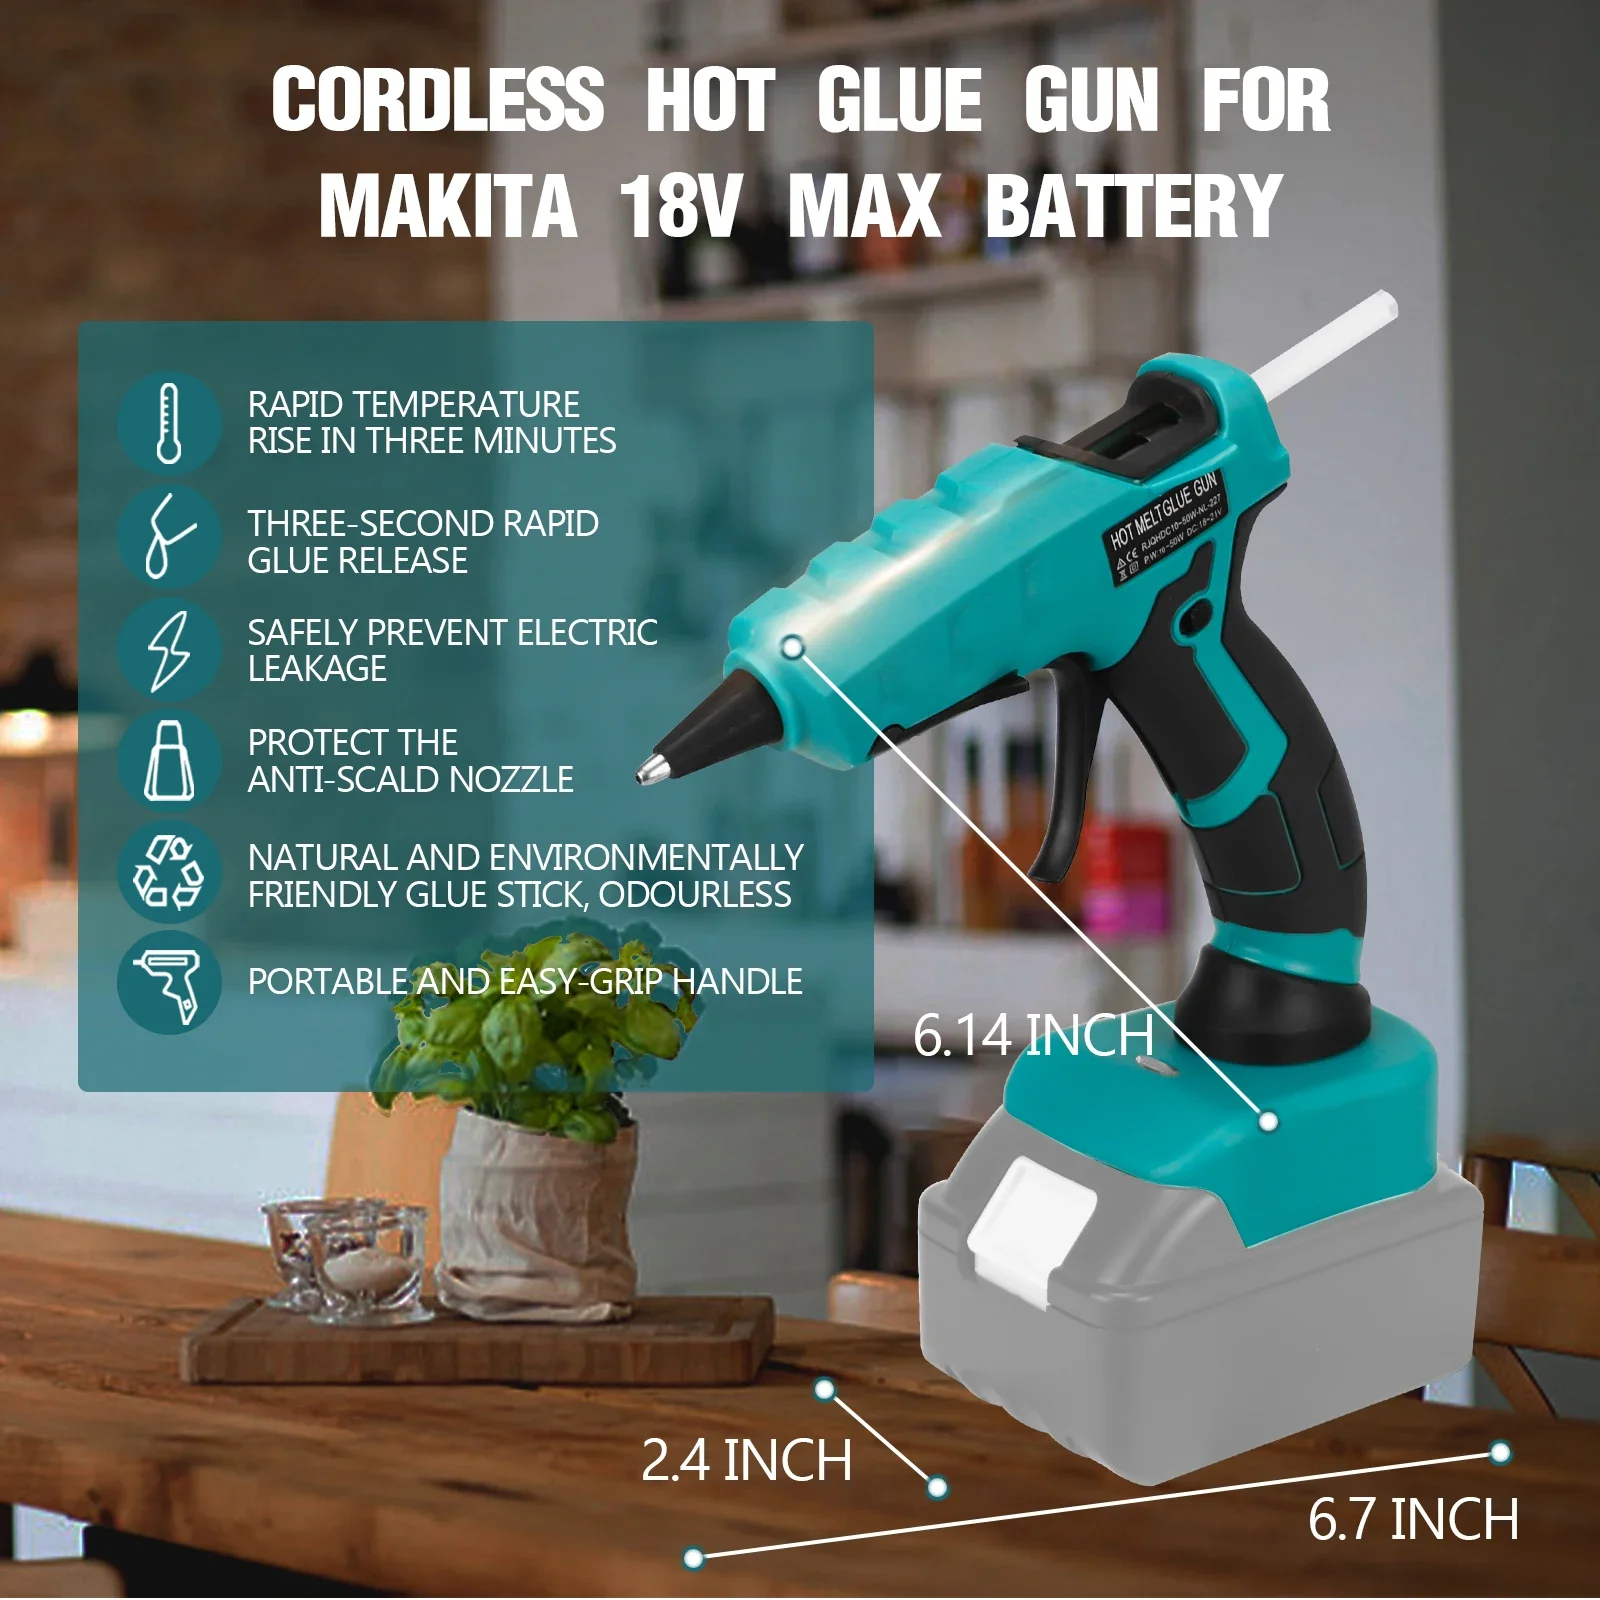 50W Cordless Hot Melt Glue Gun with 30Pcs 7mm Glue Sticks Repair DIY Tool  Fit for Milwaukee/Dewalt/Makita 18V Li-ion Battery